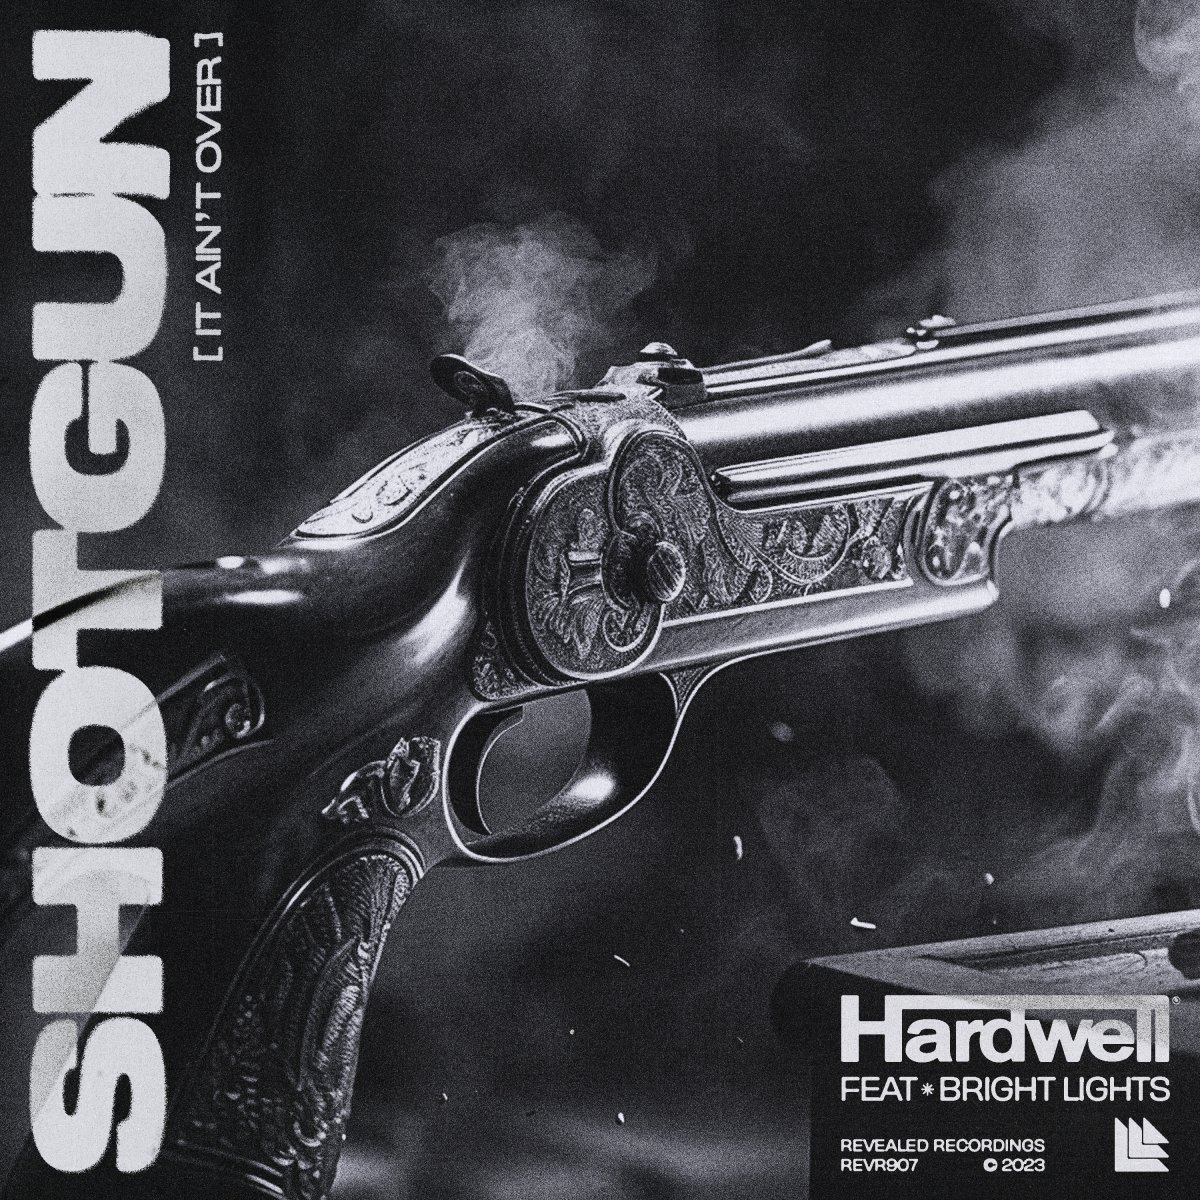 Shotgun (It Ain't Over) - Hardwell⁠ feat. Bright Lights⁠ 